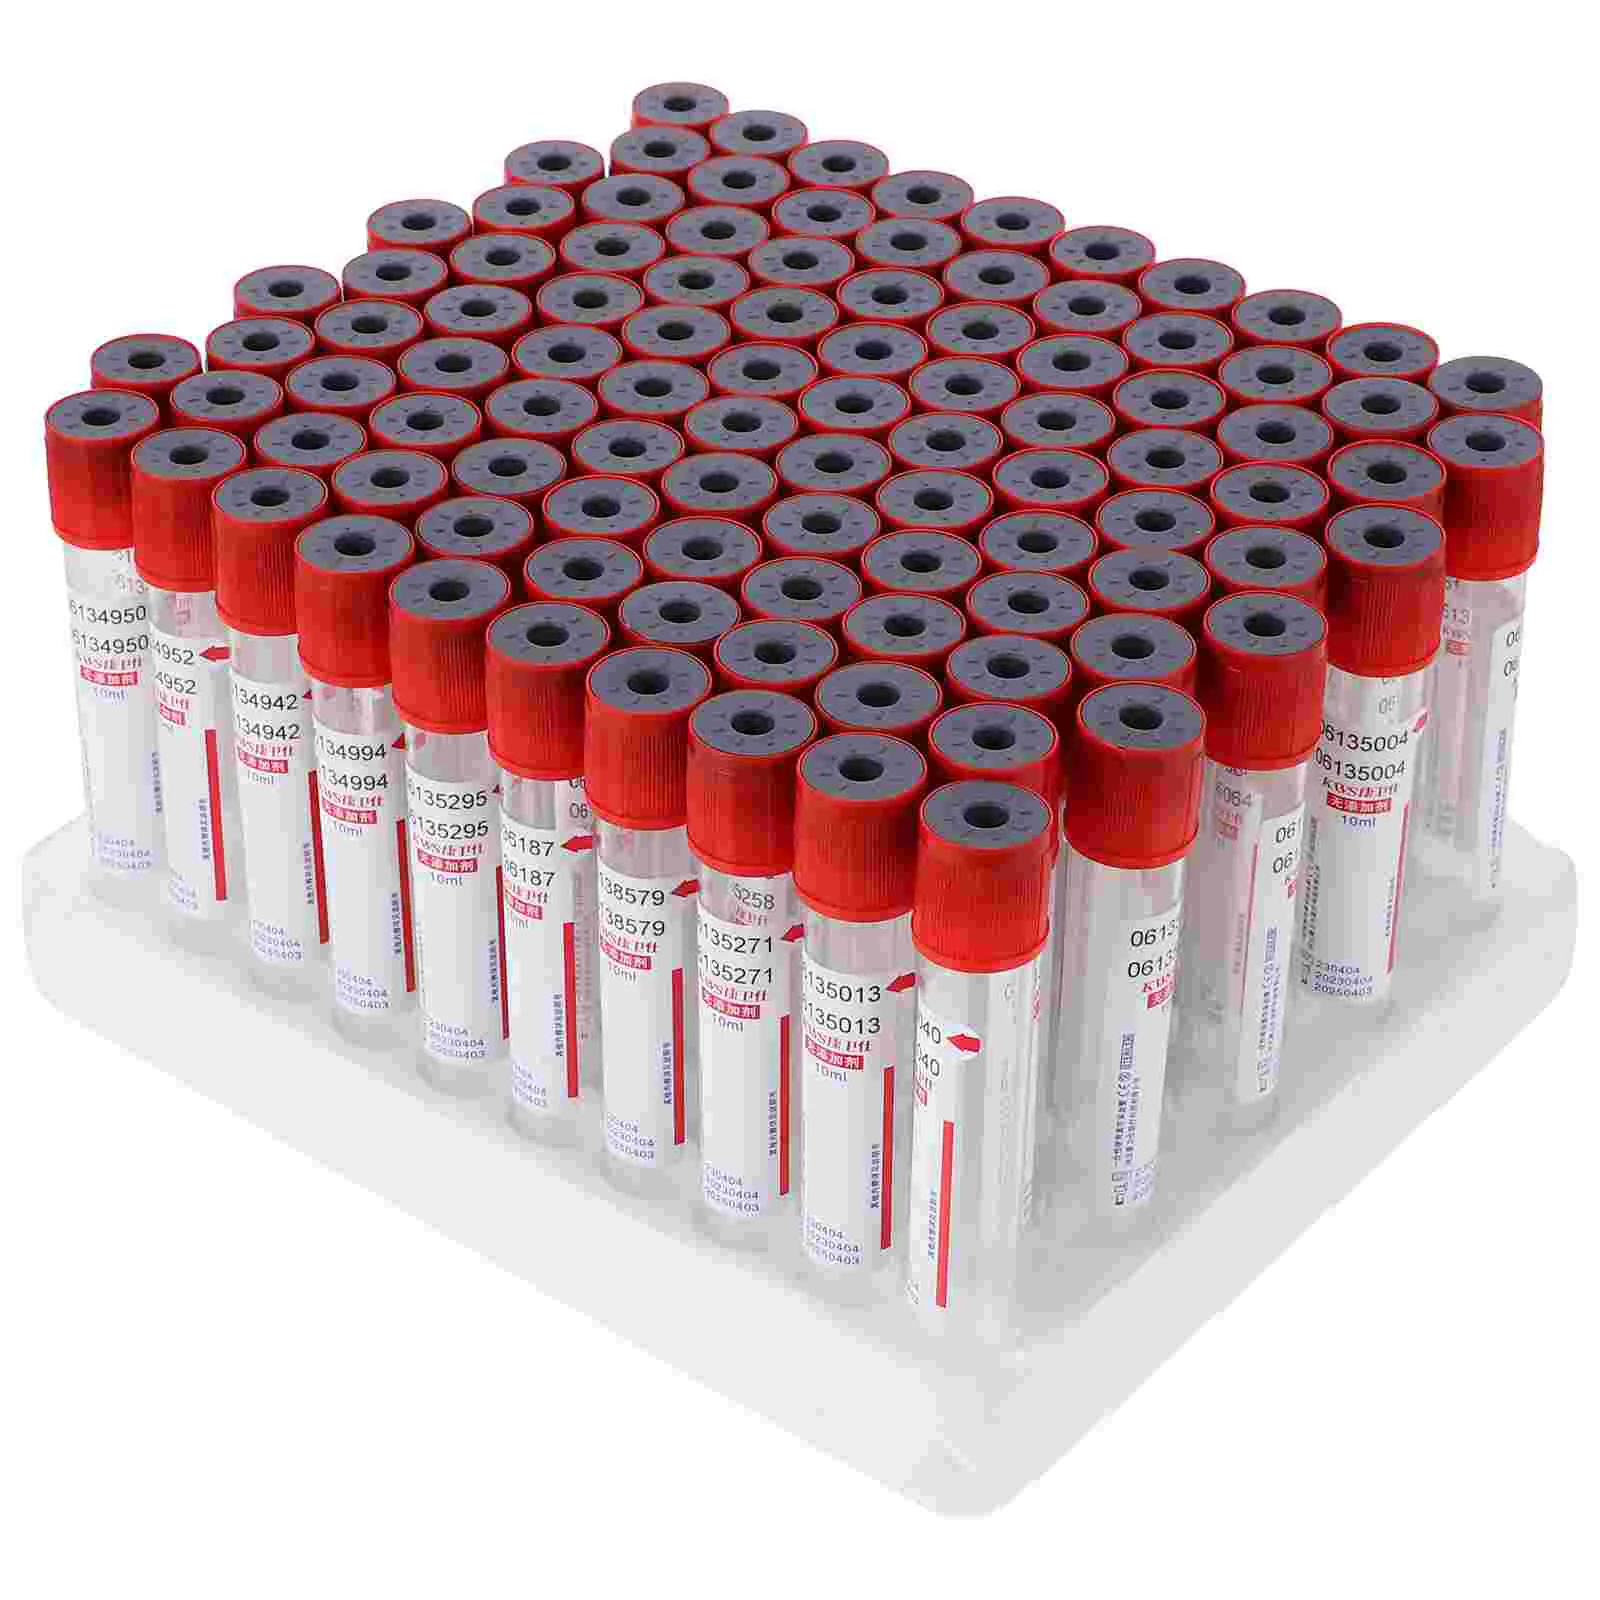 

100 Pcs 10ml Blood Collection Tube Vacuum Tubes Glass Lid Test Lids Negative Pressure Collector Glue Head Disposable Experiment